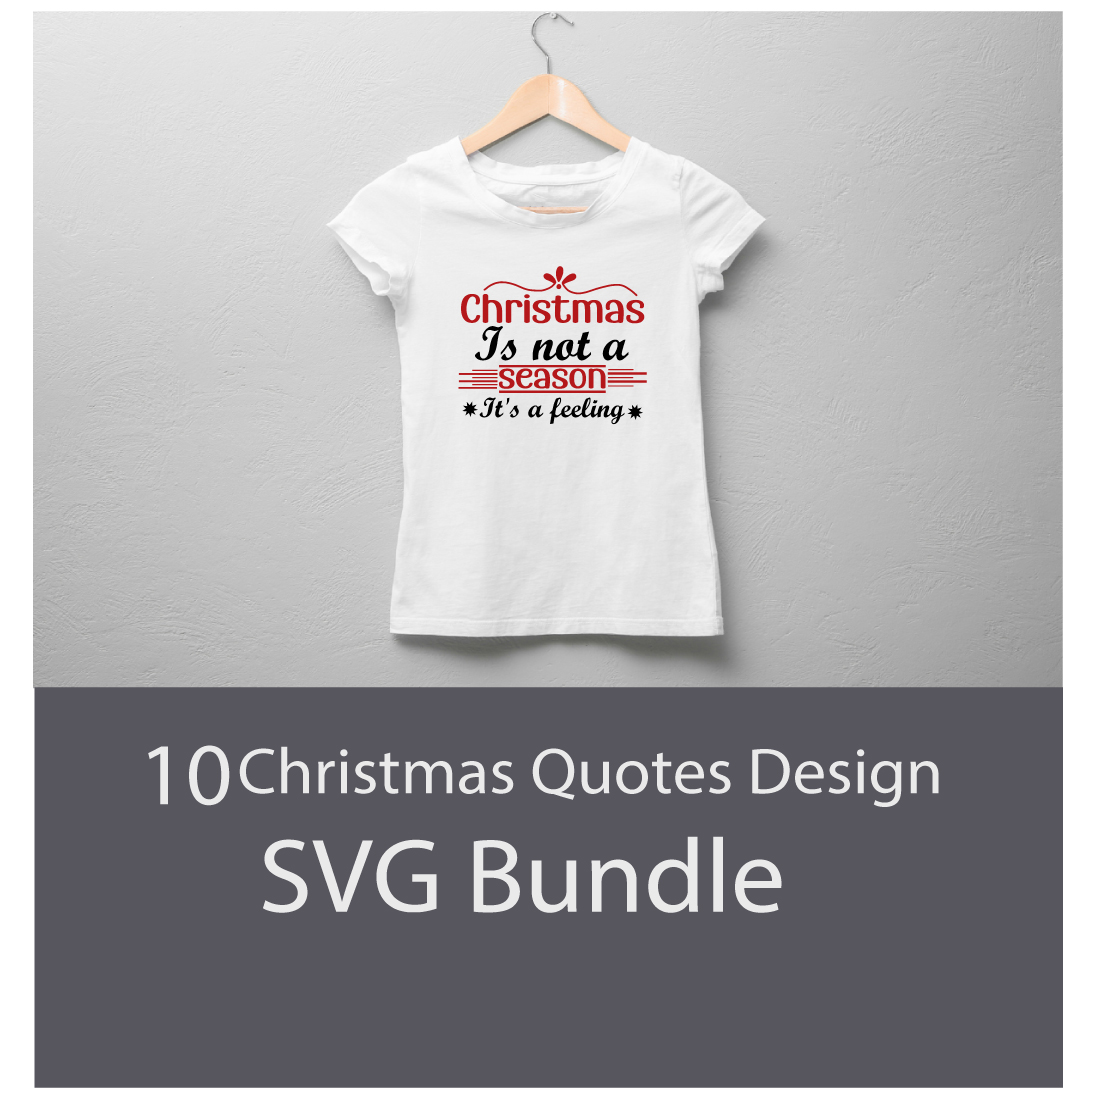 T-shirt Christmas Typography Design SVG Bundle cover image.